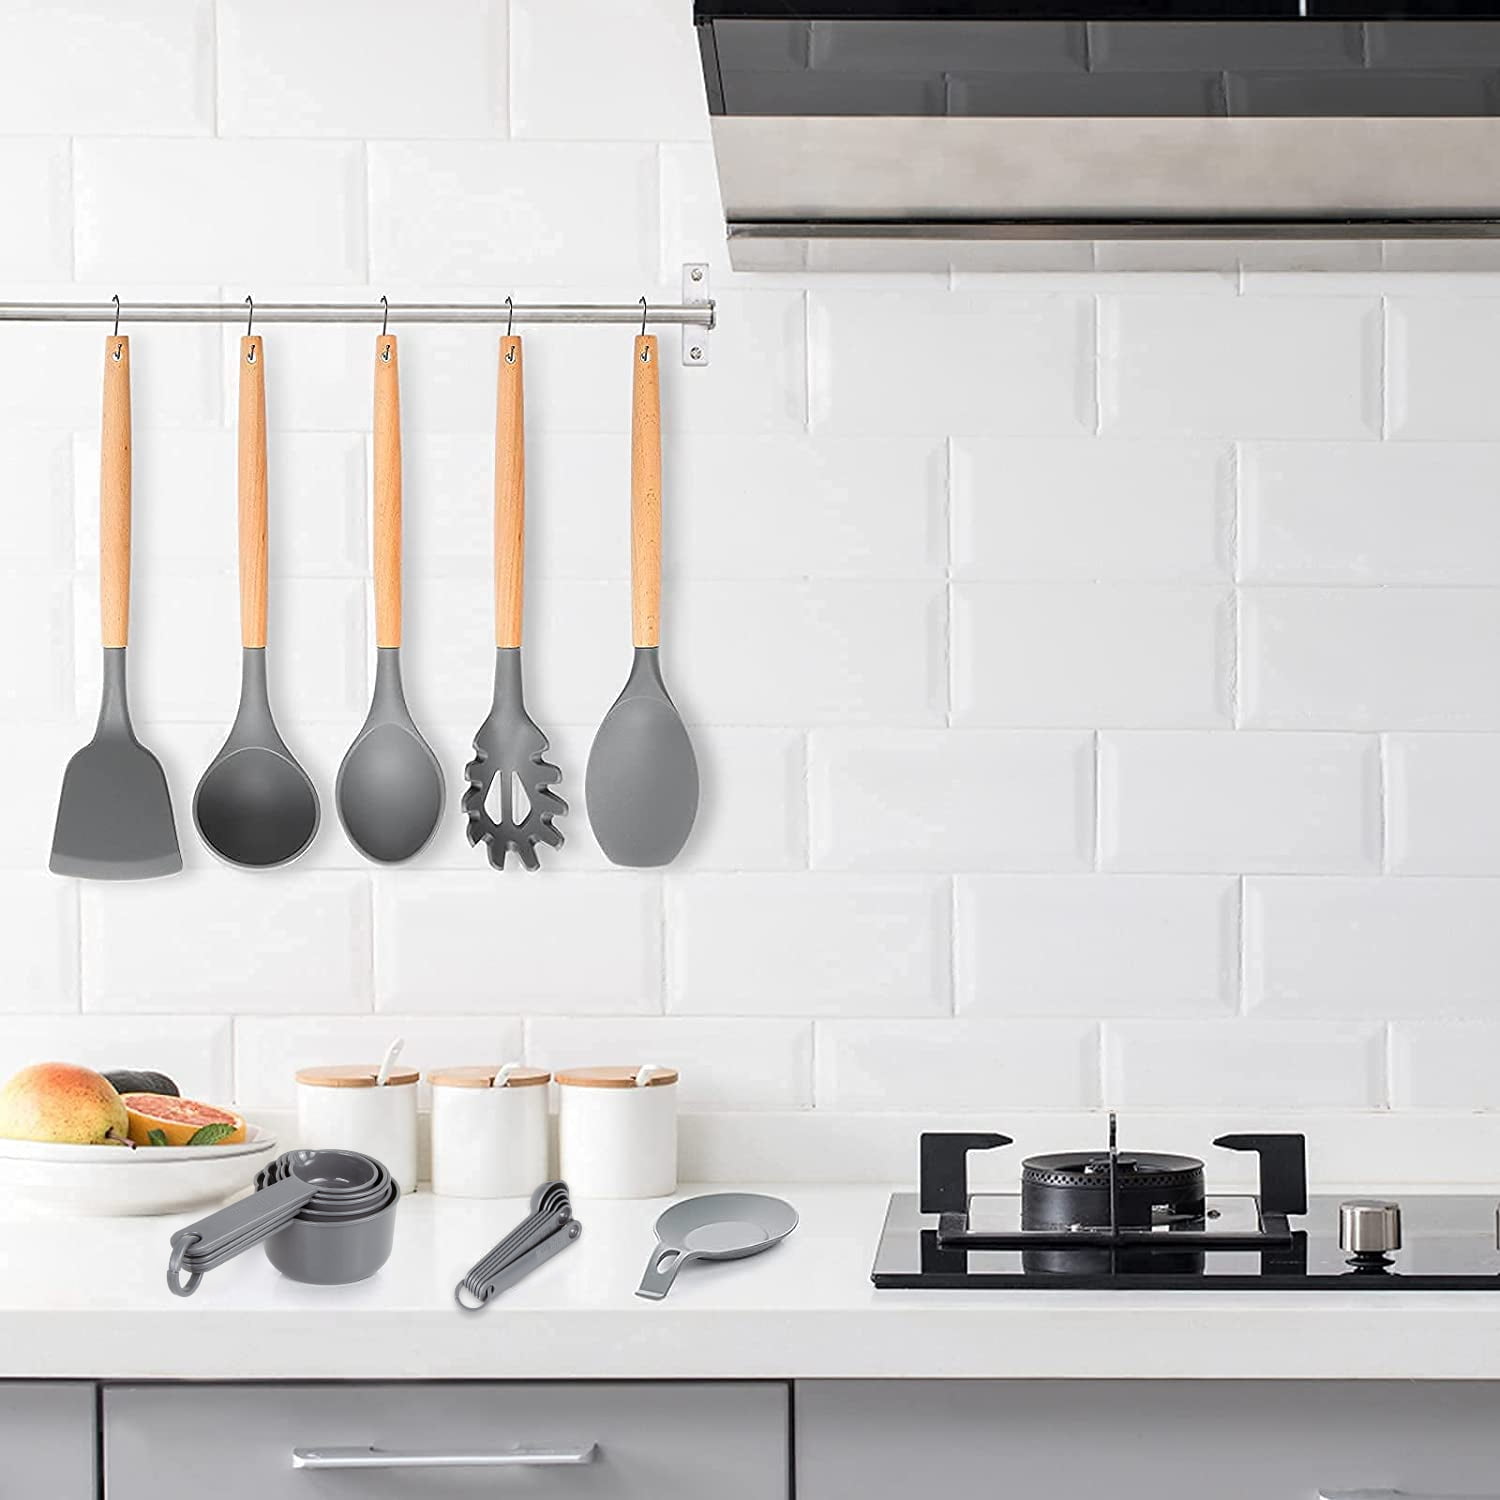 Black Silicone Cooking Utensils Set - 446°F Heat Resistant Kitchen